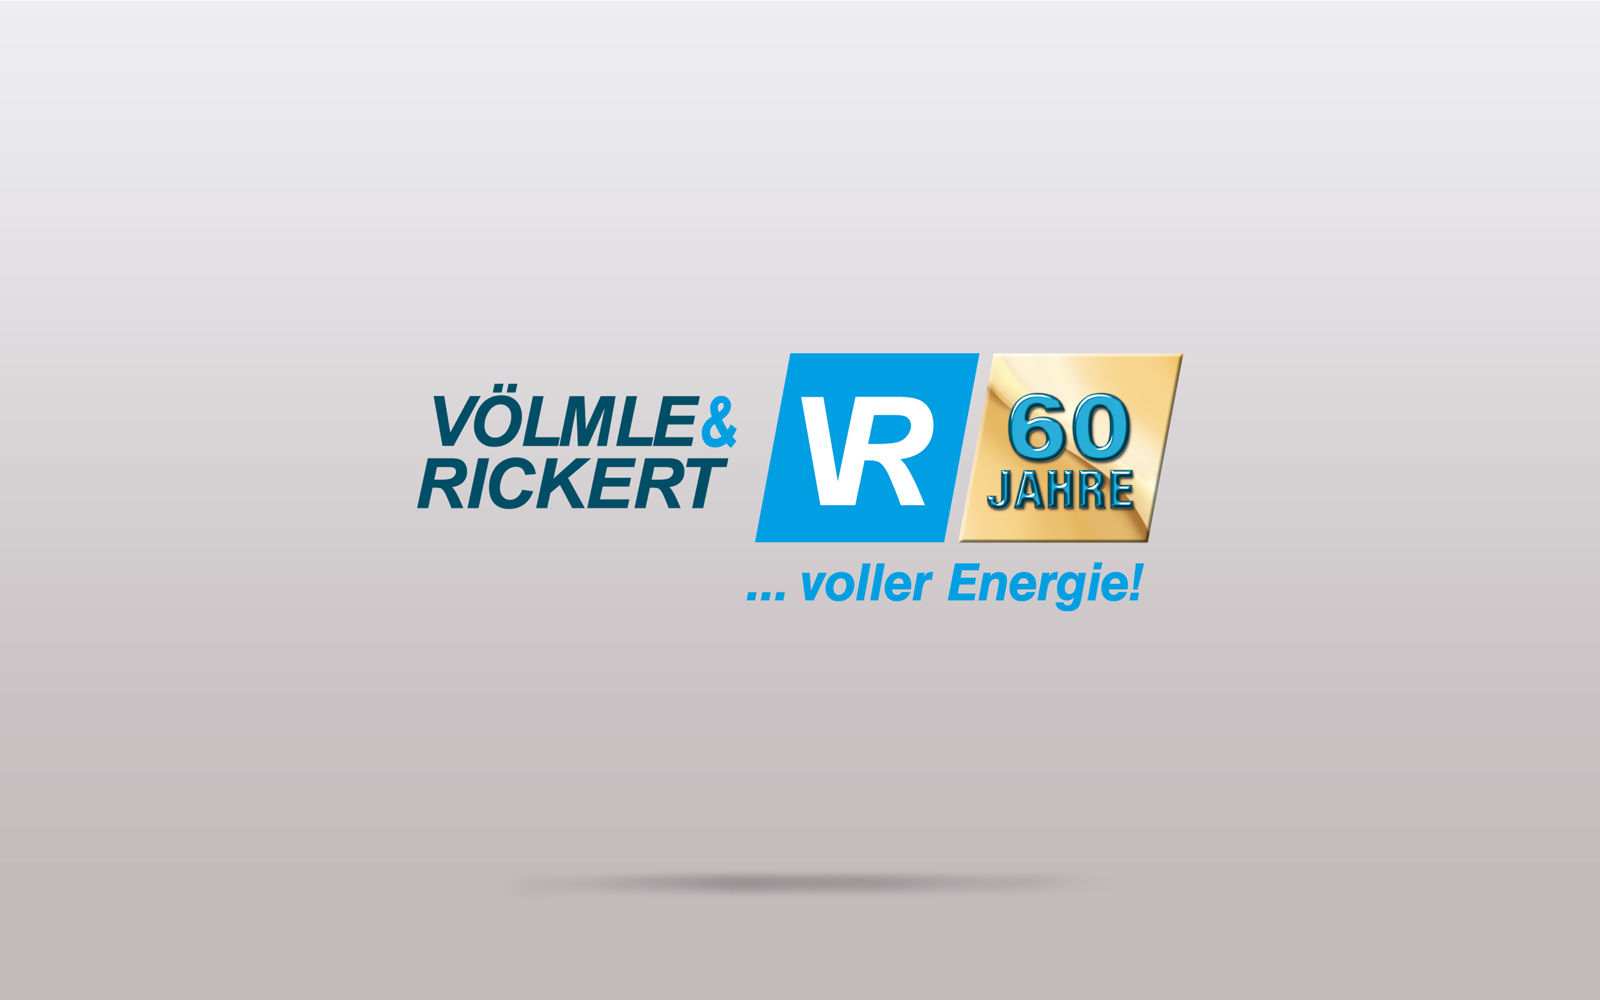 Völmle & Rickert Logoentwurf Corporate Design